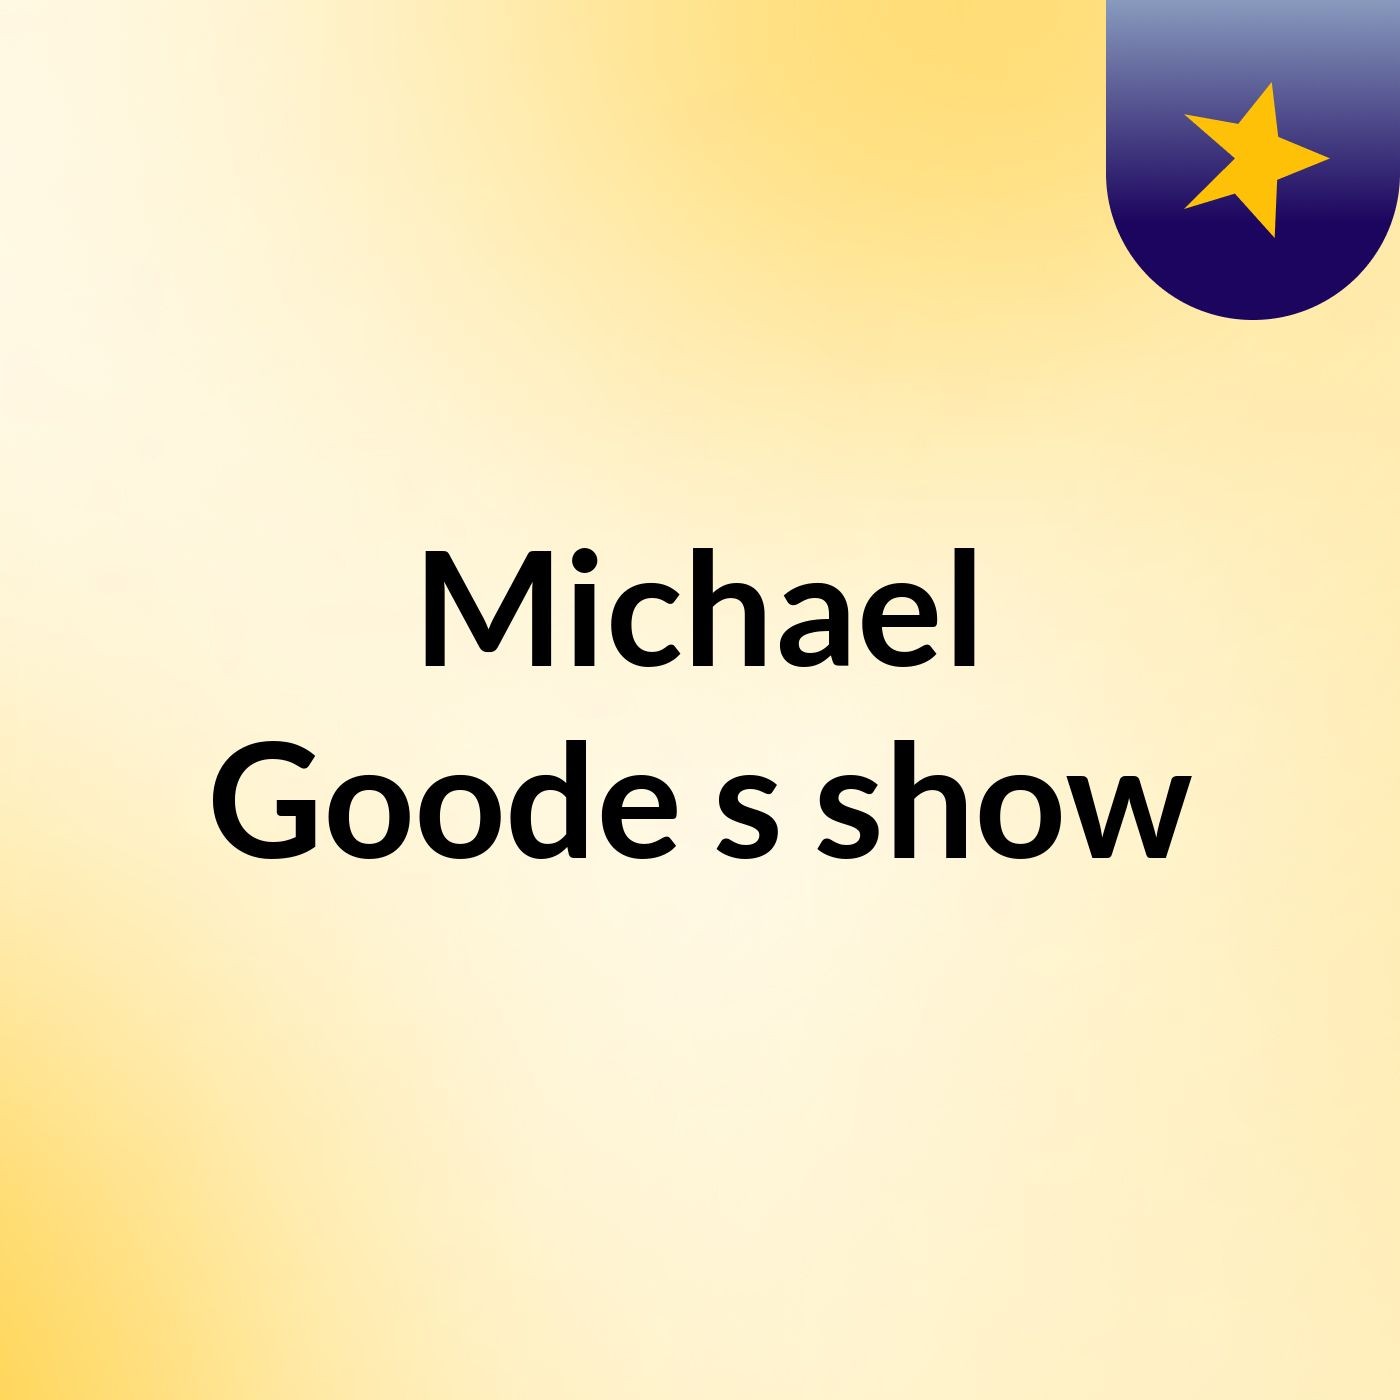 Episode 2 - Michael Goode's show